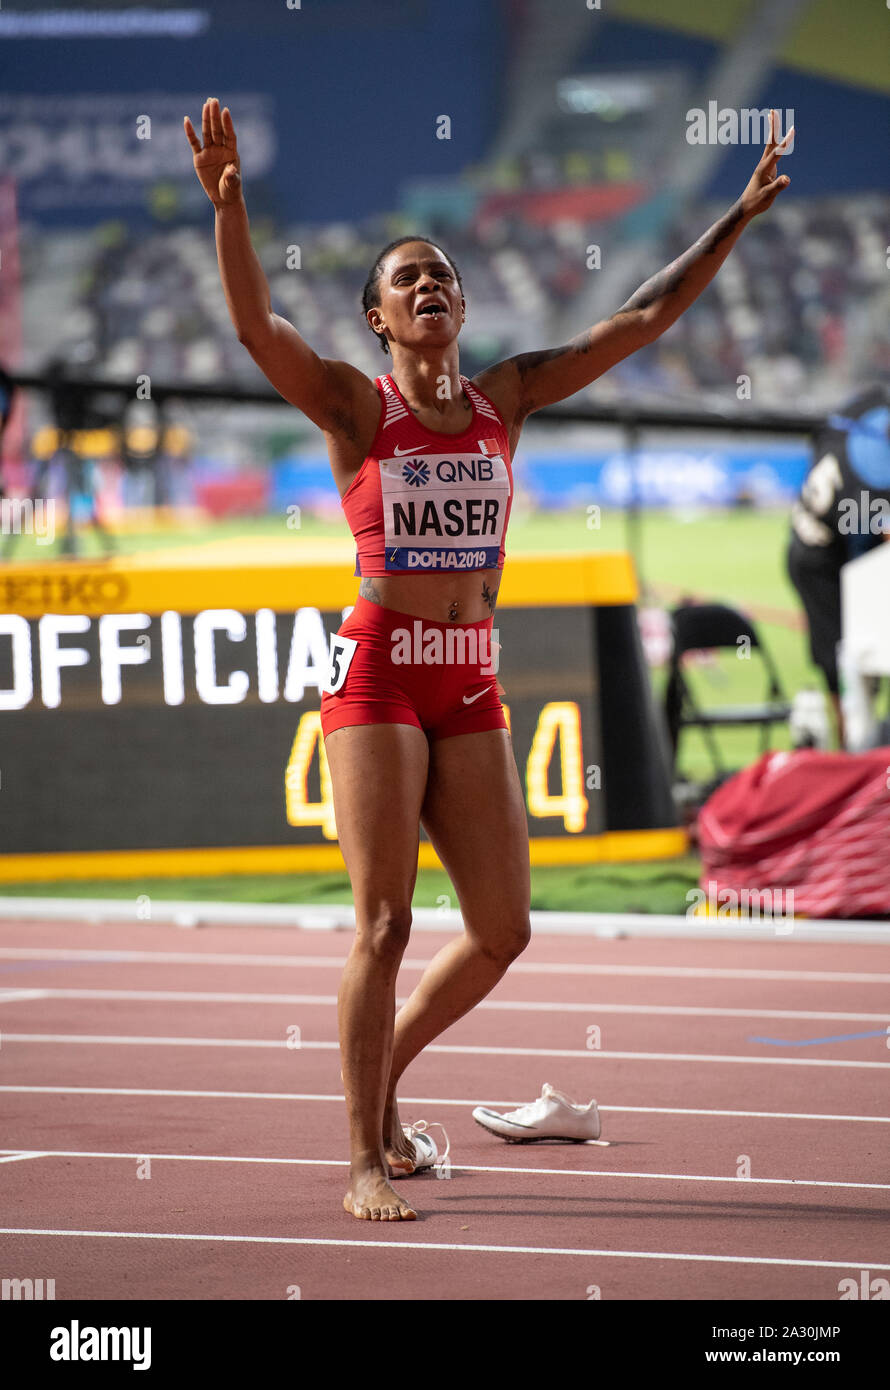 Salwa Eid Naser of Bahrain celebrates during the womens 400m-IAAF World Athletics Championships at Khalifa International Stadium in Doha